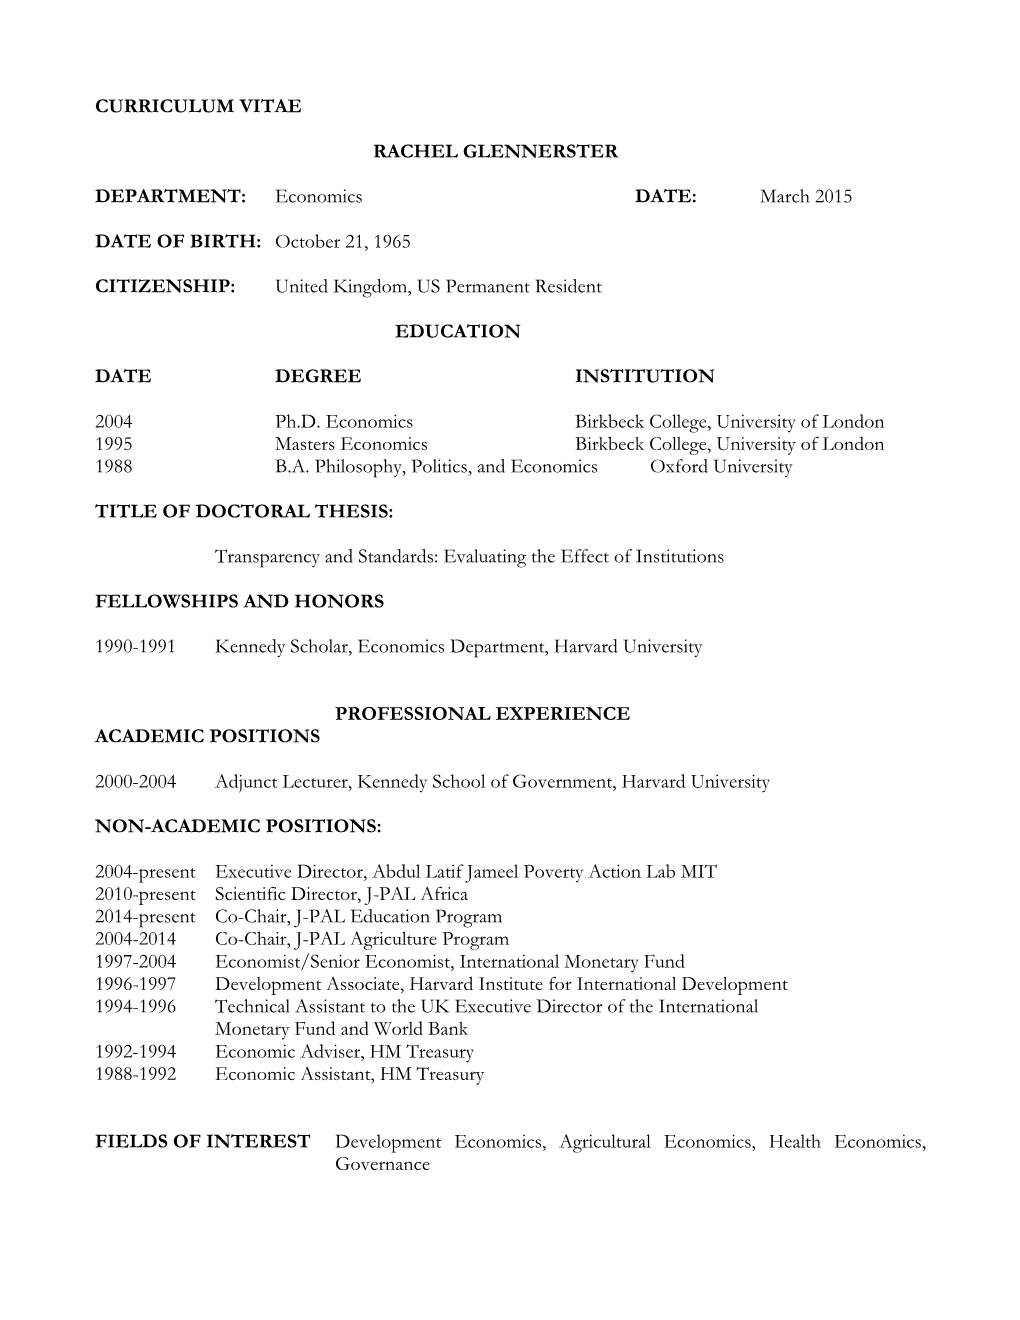 Glennerster Academic CV March 2015